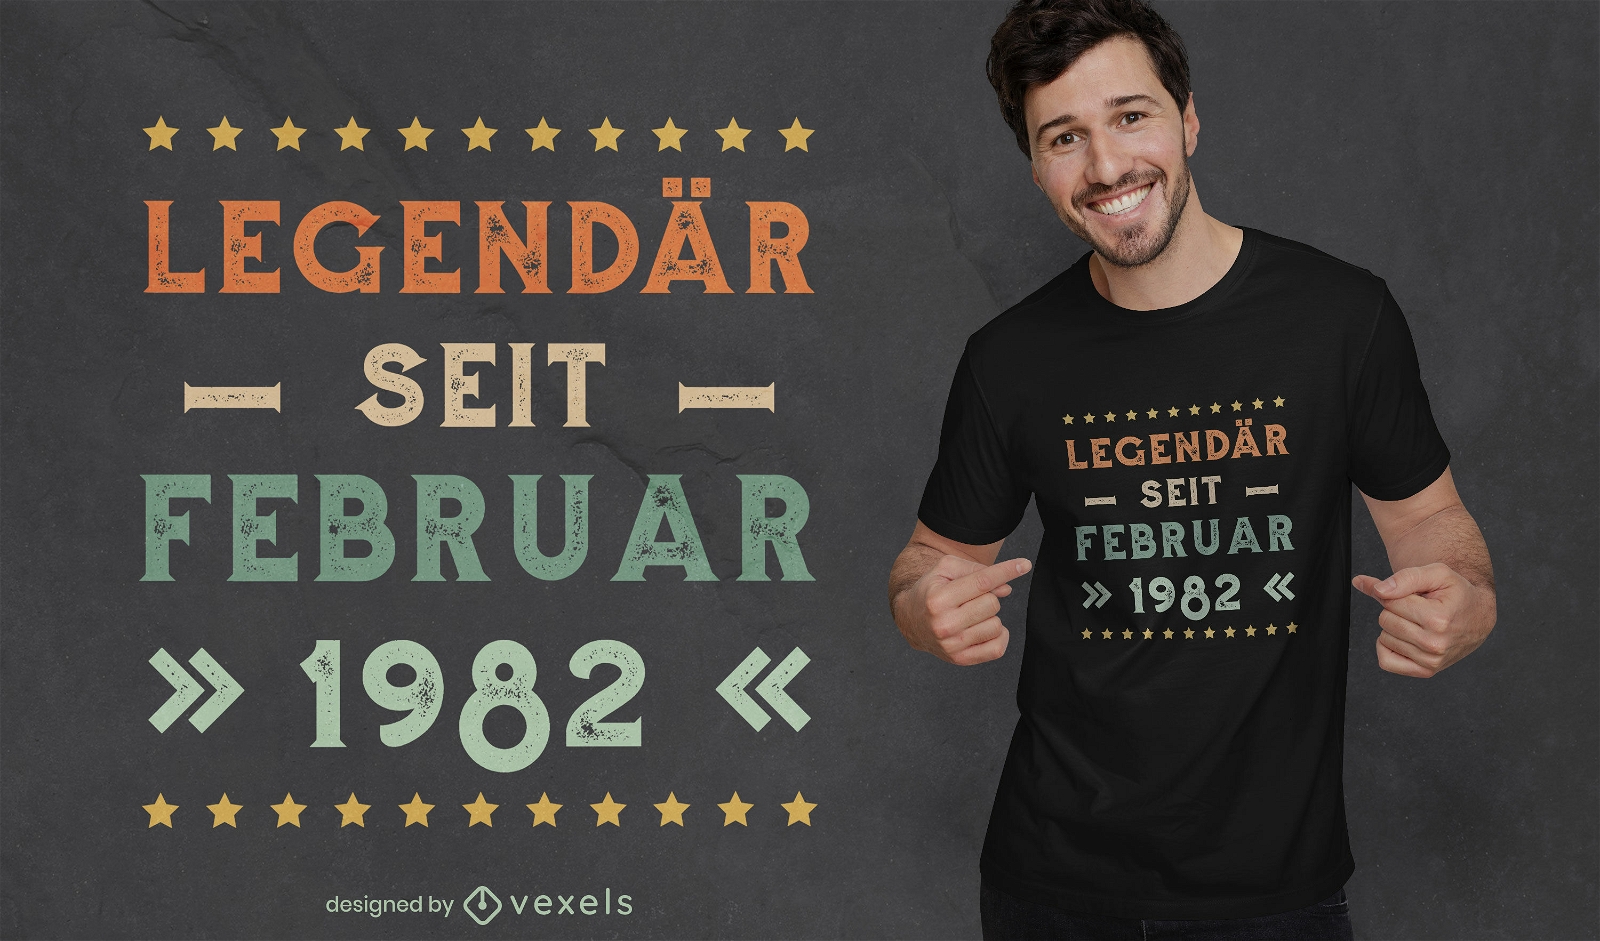 Legendary birthday t-shirt design